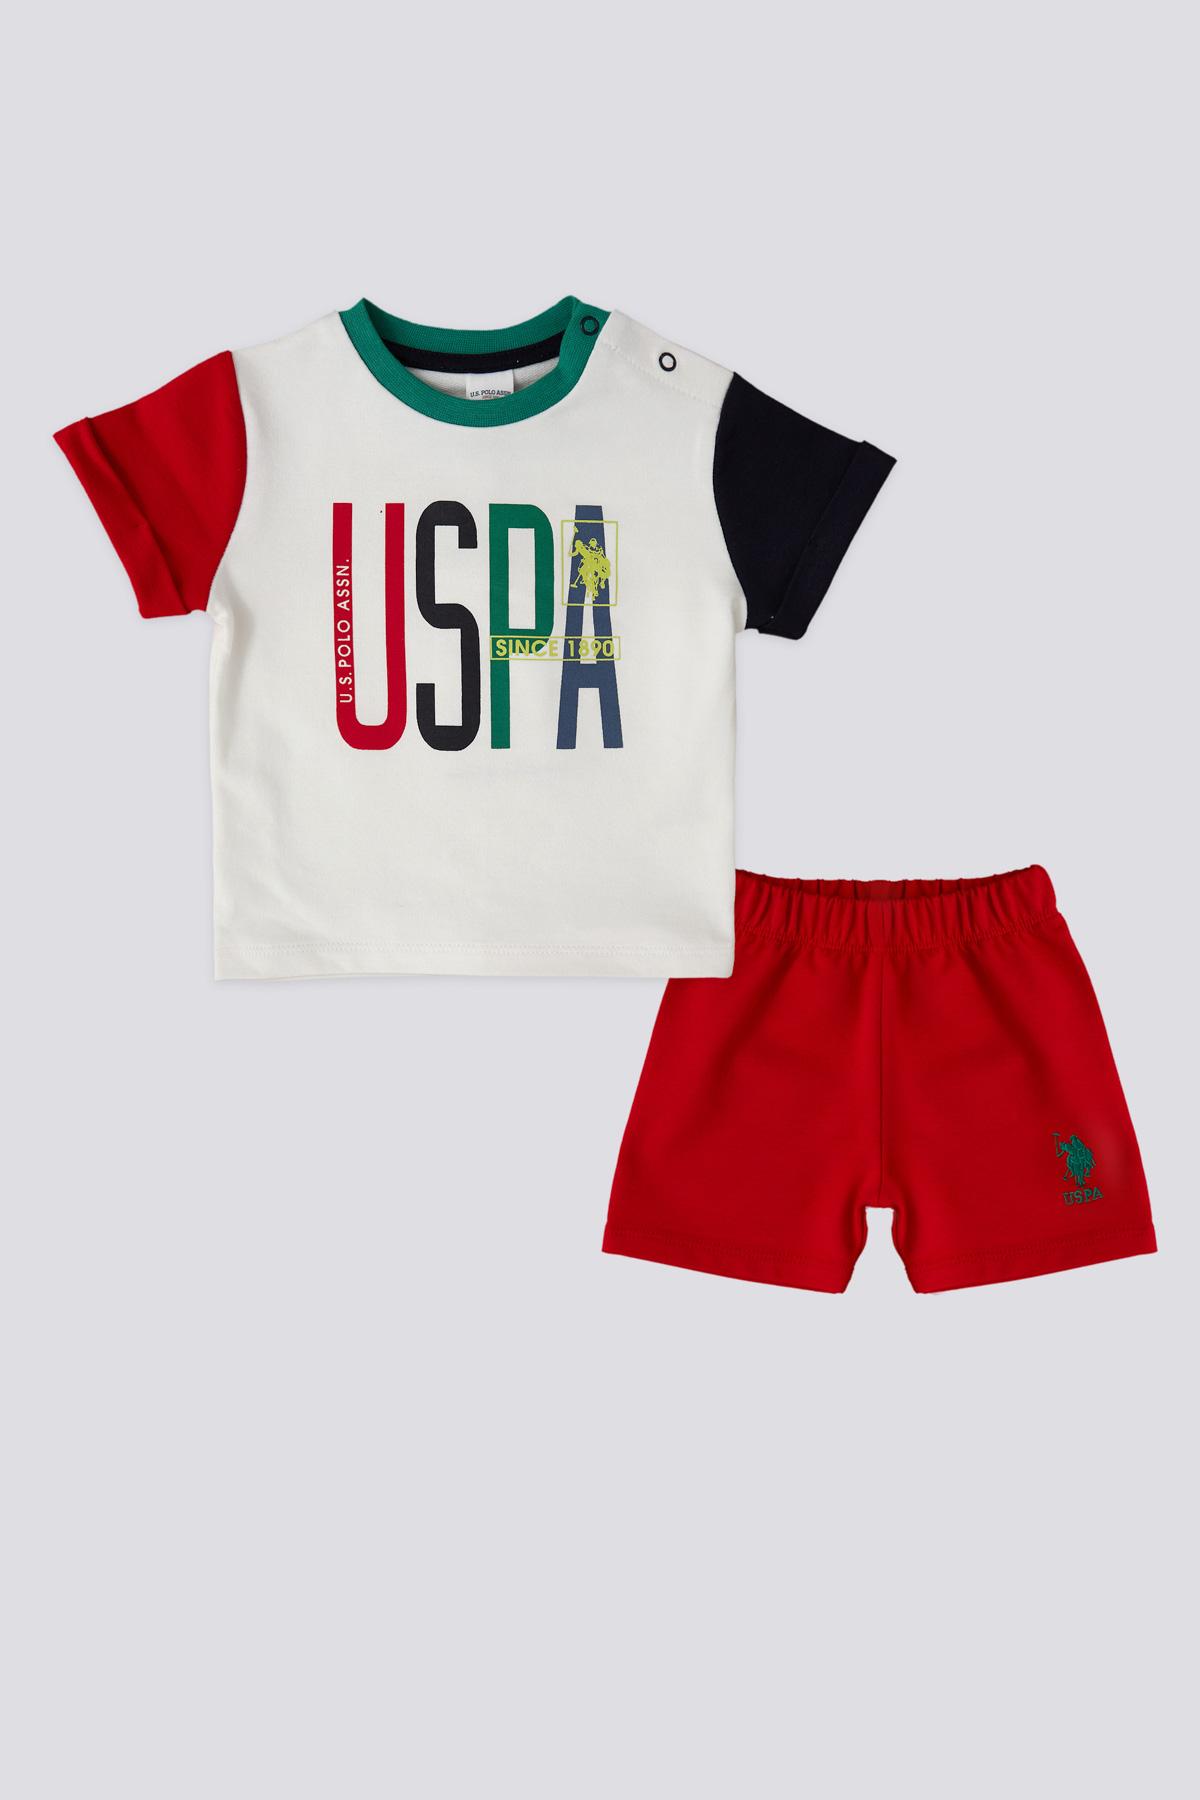 Selected image for U.S. Polo Assn. Komplet za bebe USB1821, Crveno-beli